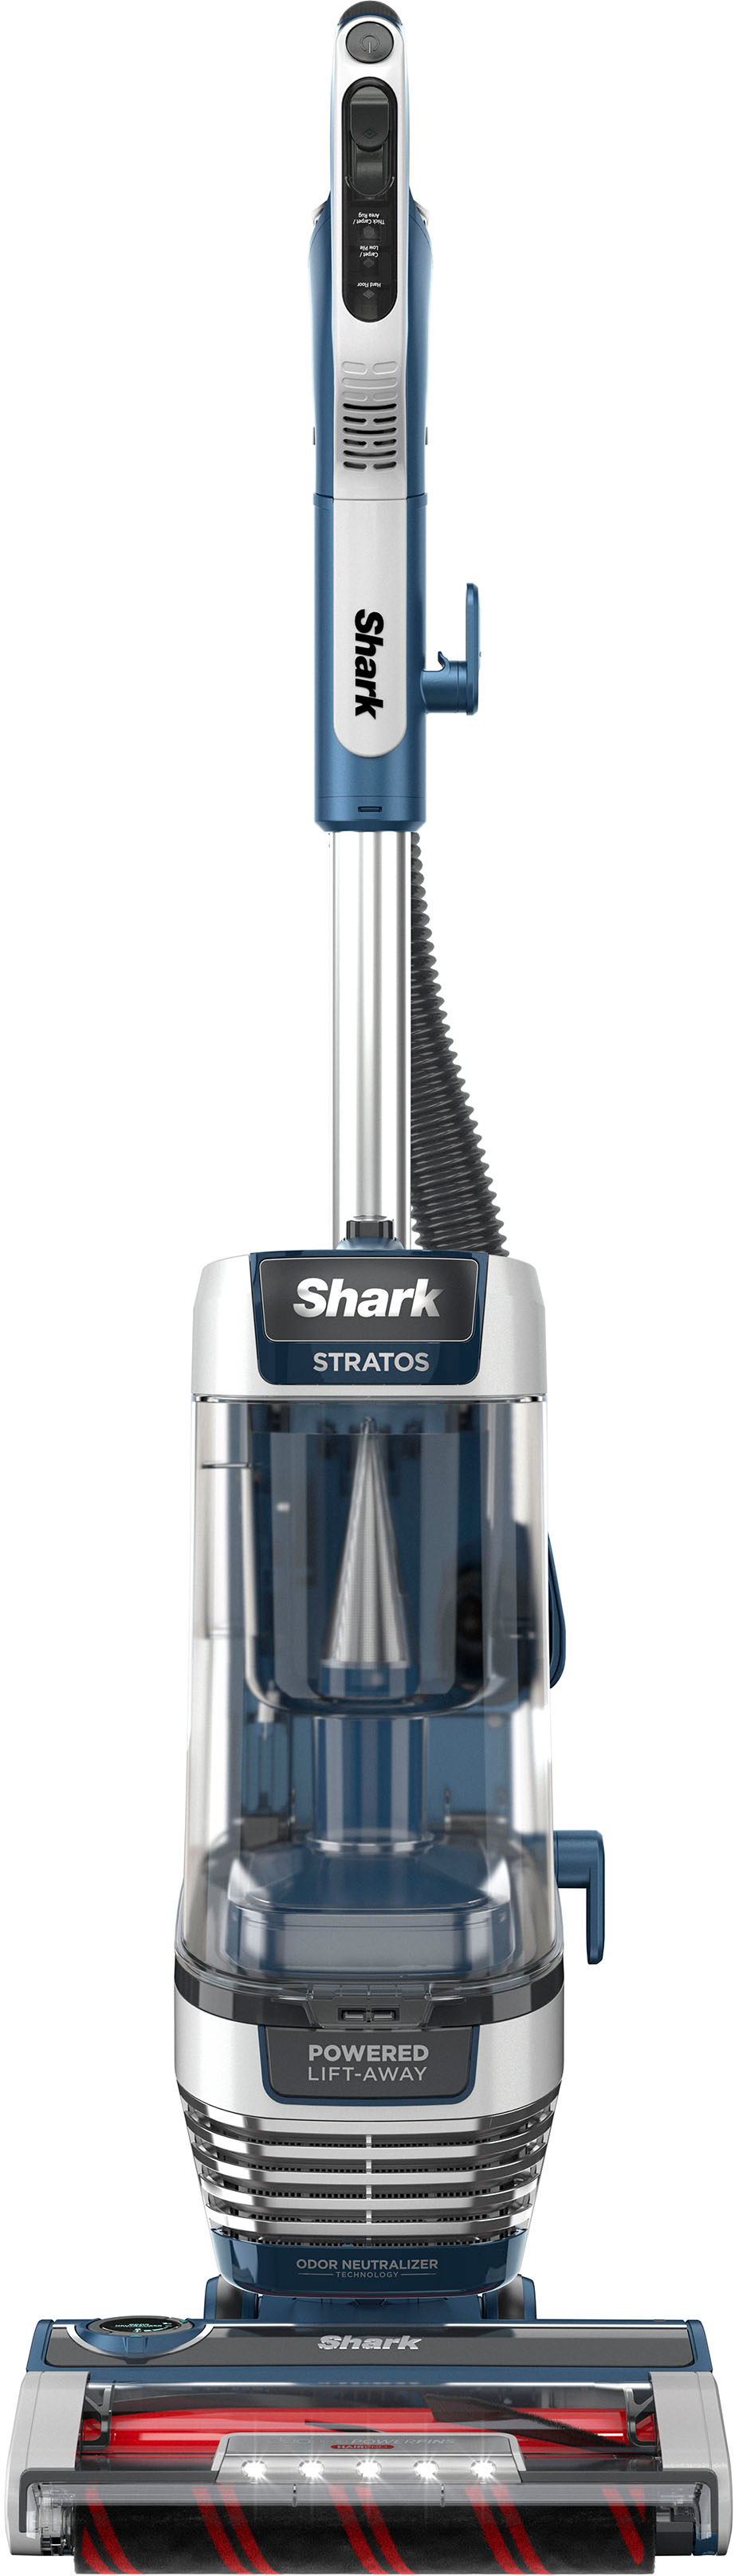 Shark vacuum sale: Save on top-rated Shark vacuum cleaners